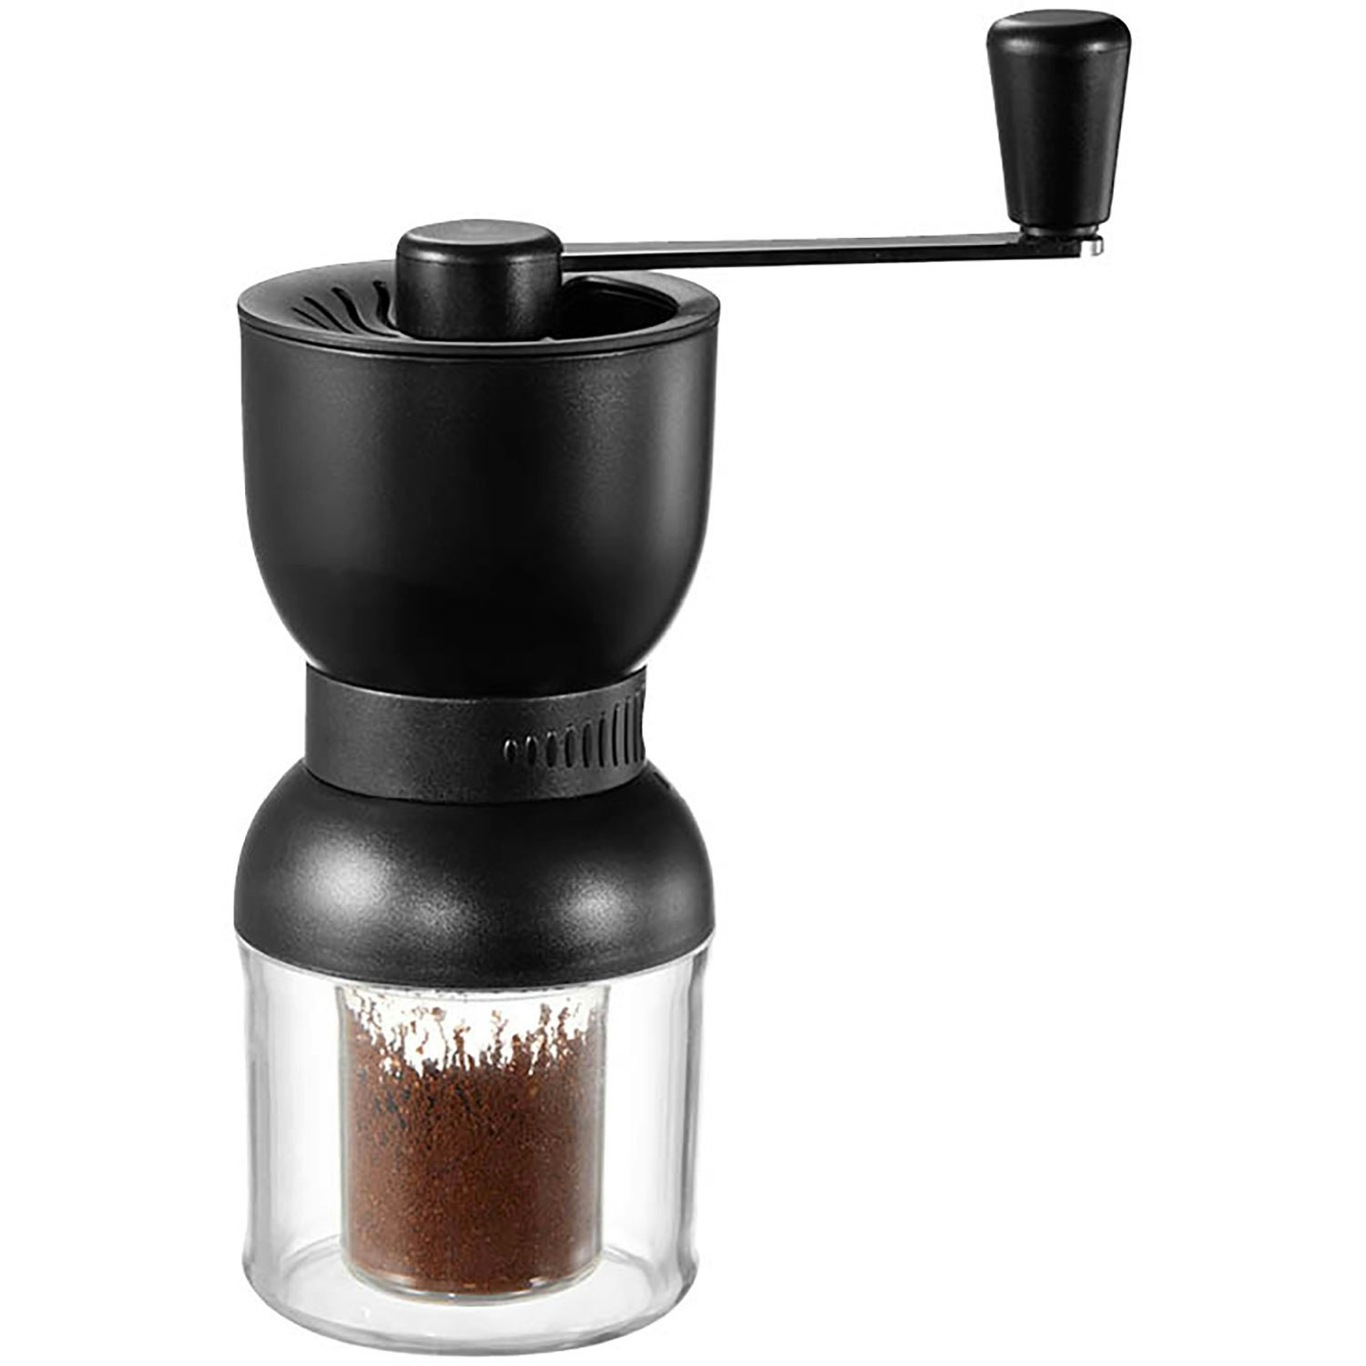 https://royaldesign.com/image/2/dorre-catura-coffee-grinder-manual-ceramic-mill-0?w=800&quality=80